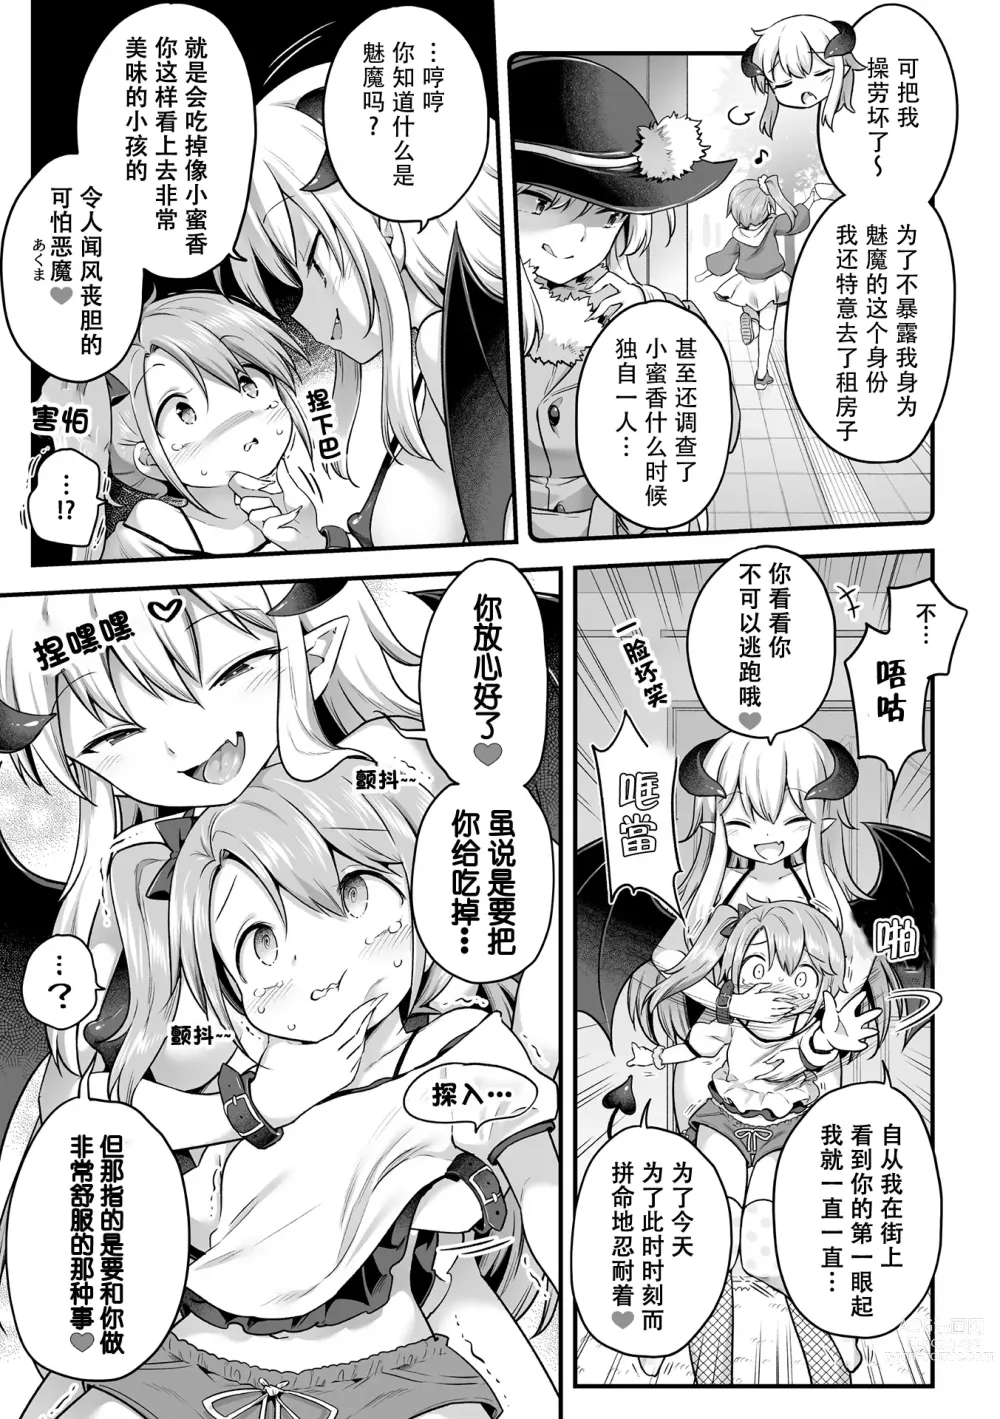 Page 7 of manga 2D Comic Magazine Succubus Yuri H Vol. 1